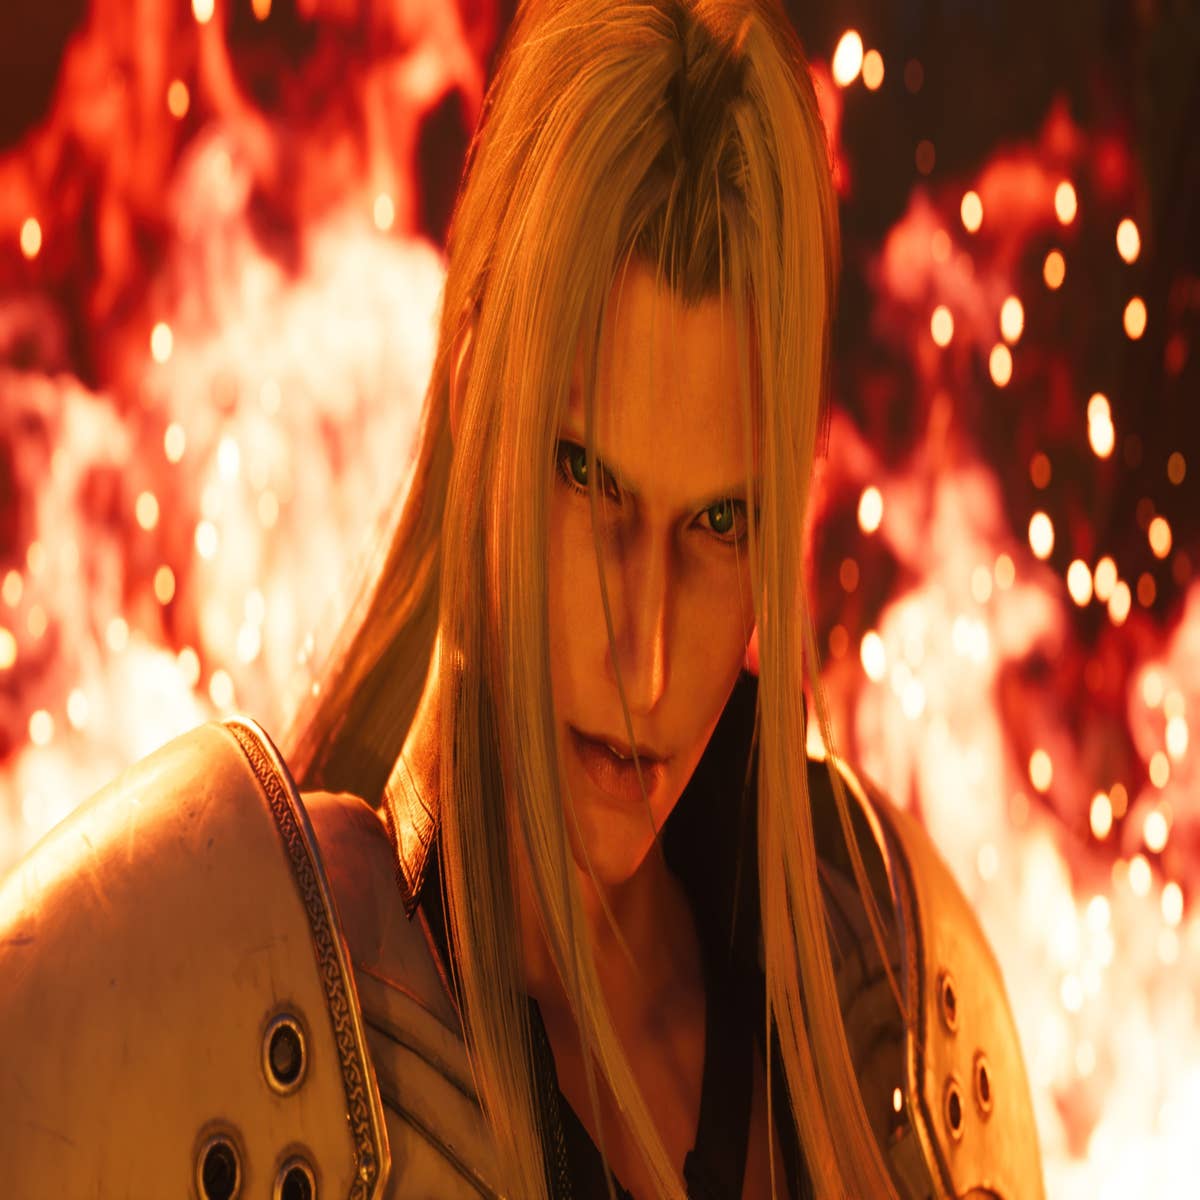 Final Fantasy VII Rebirth: Anticipated Release on the Horizon - GAMINGDEPUTY